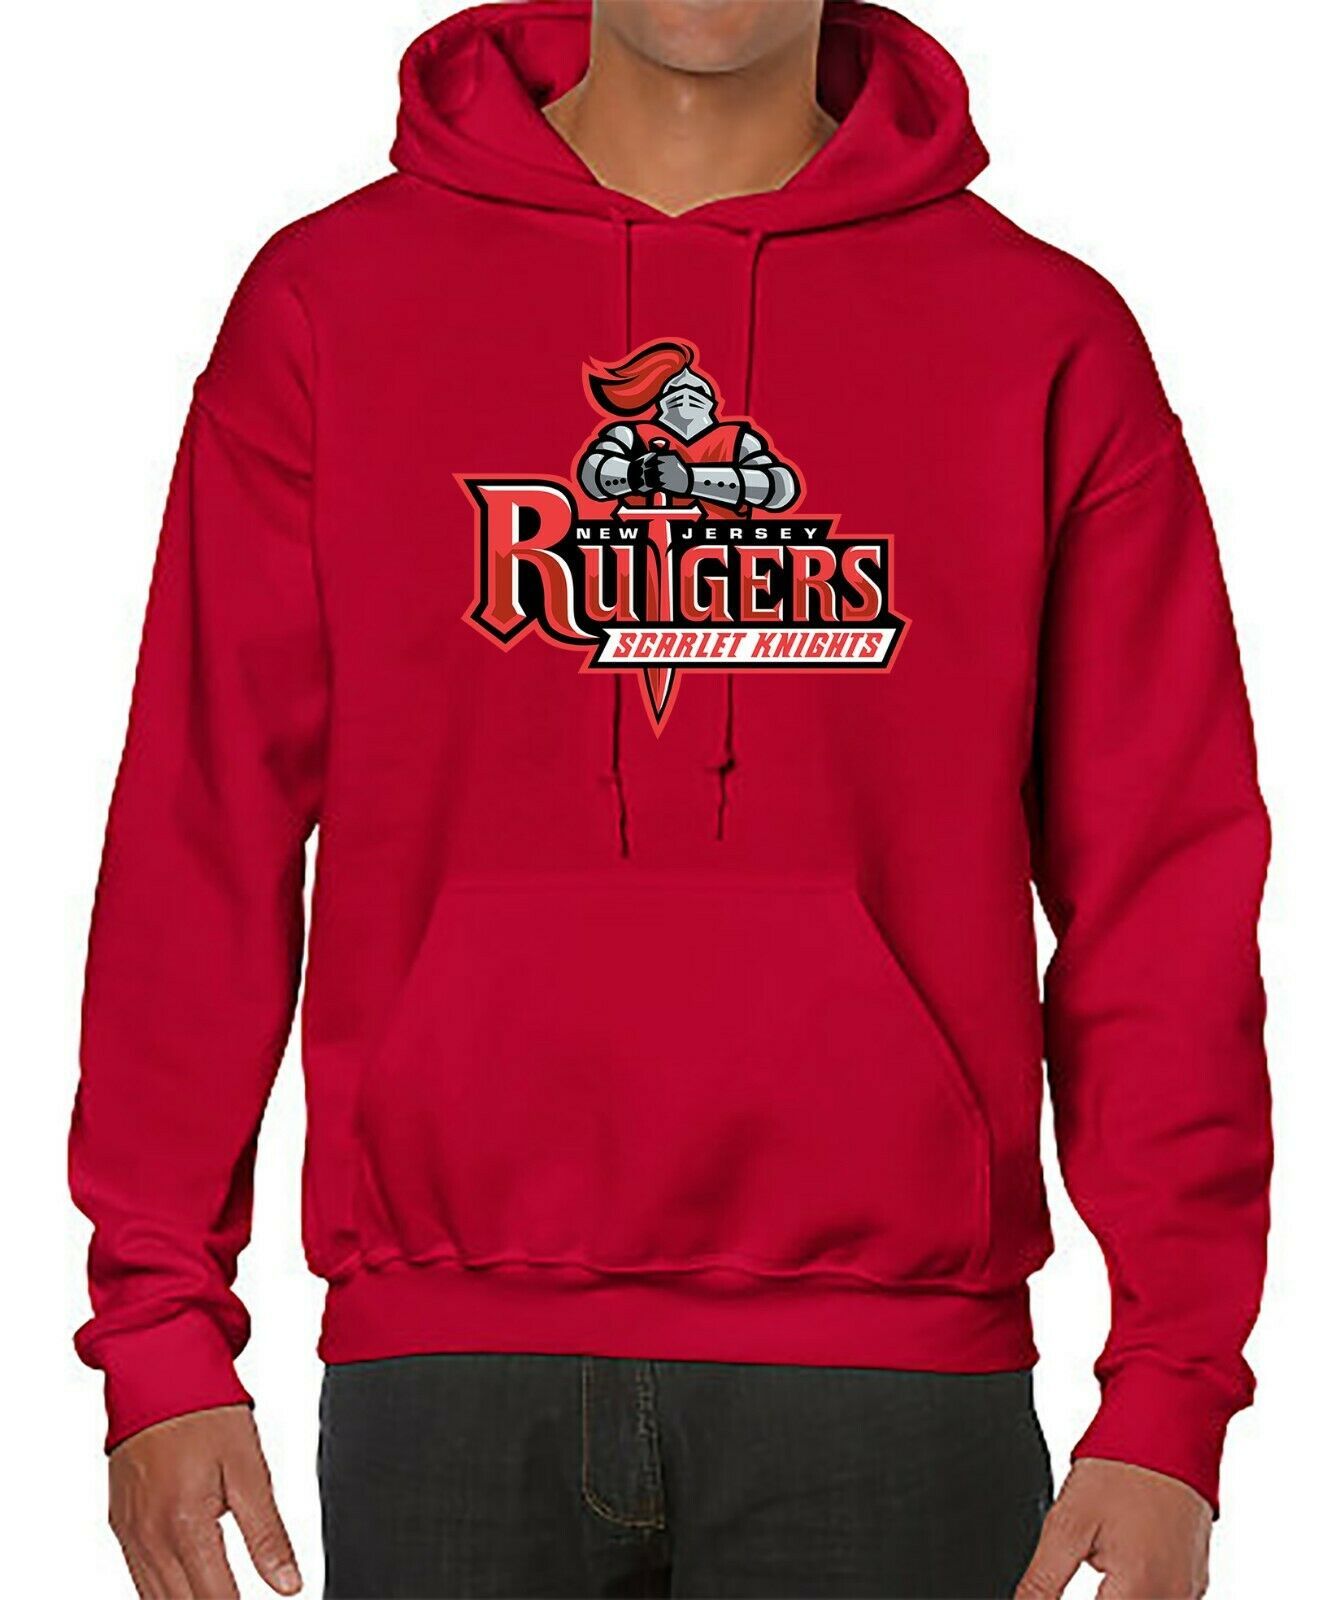 NCAA Basketball team hoodie - sweater with Rutgers logo - comfort ...